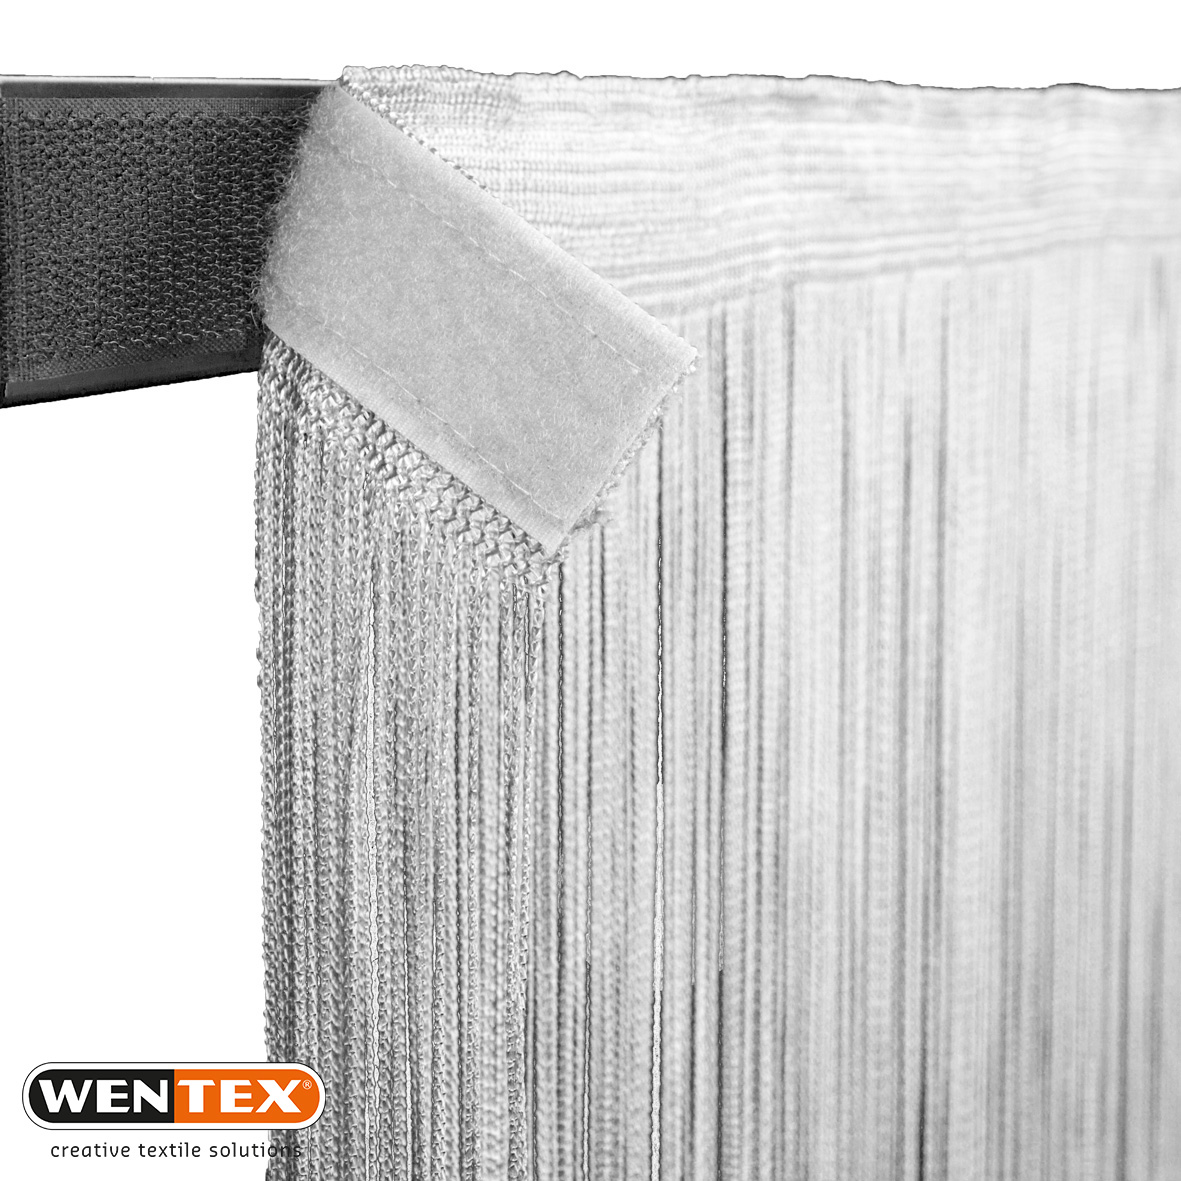 werk bestuurder Bijdrage Wentex creative textile solutions - Products